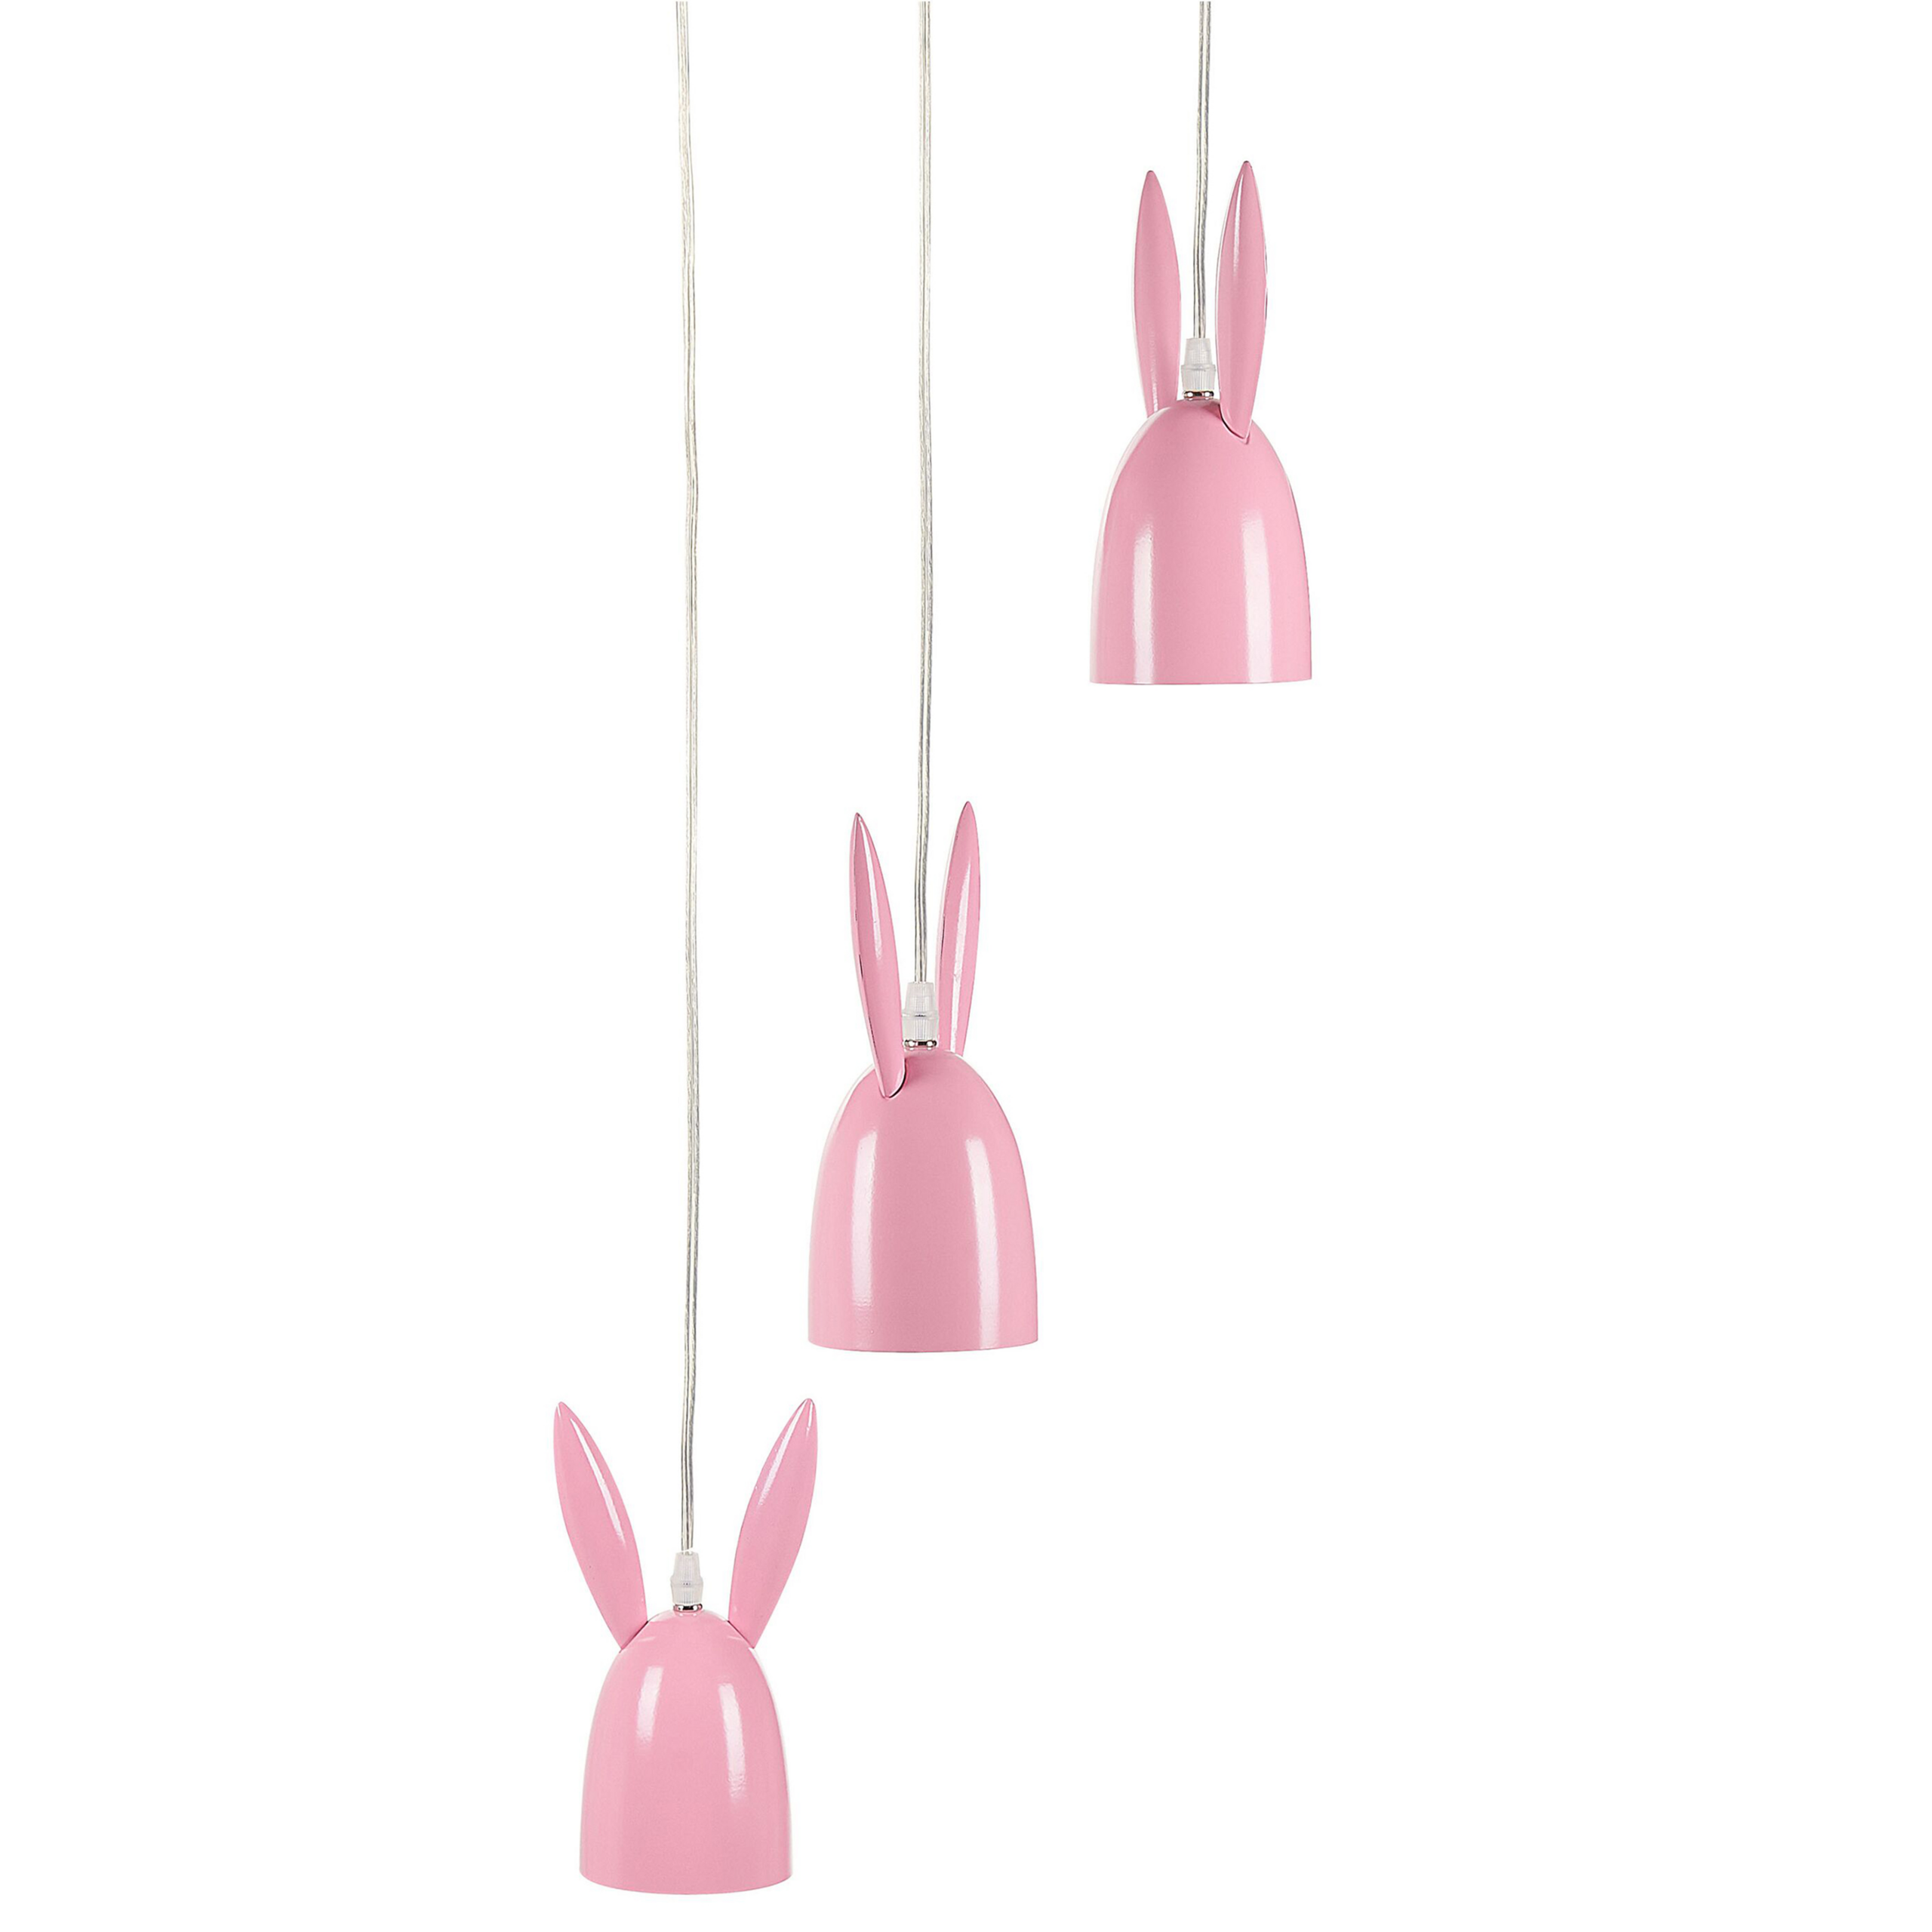 Beliani Pendant Lamp Pink Metal Iron 154 cm Ceiling Lamp Bunny Ears 3 Shades Kids Room Modern Design